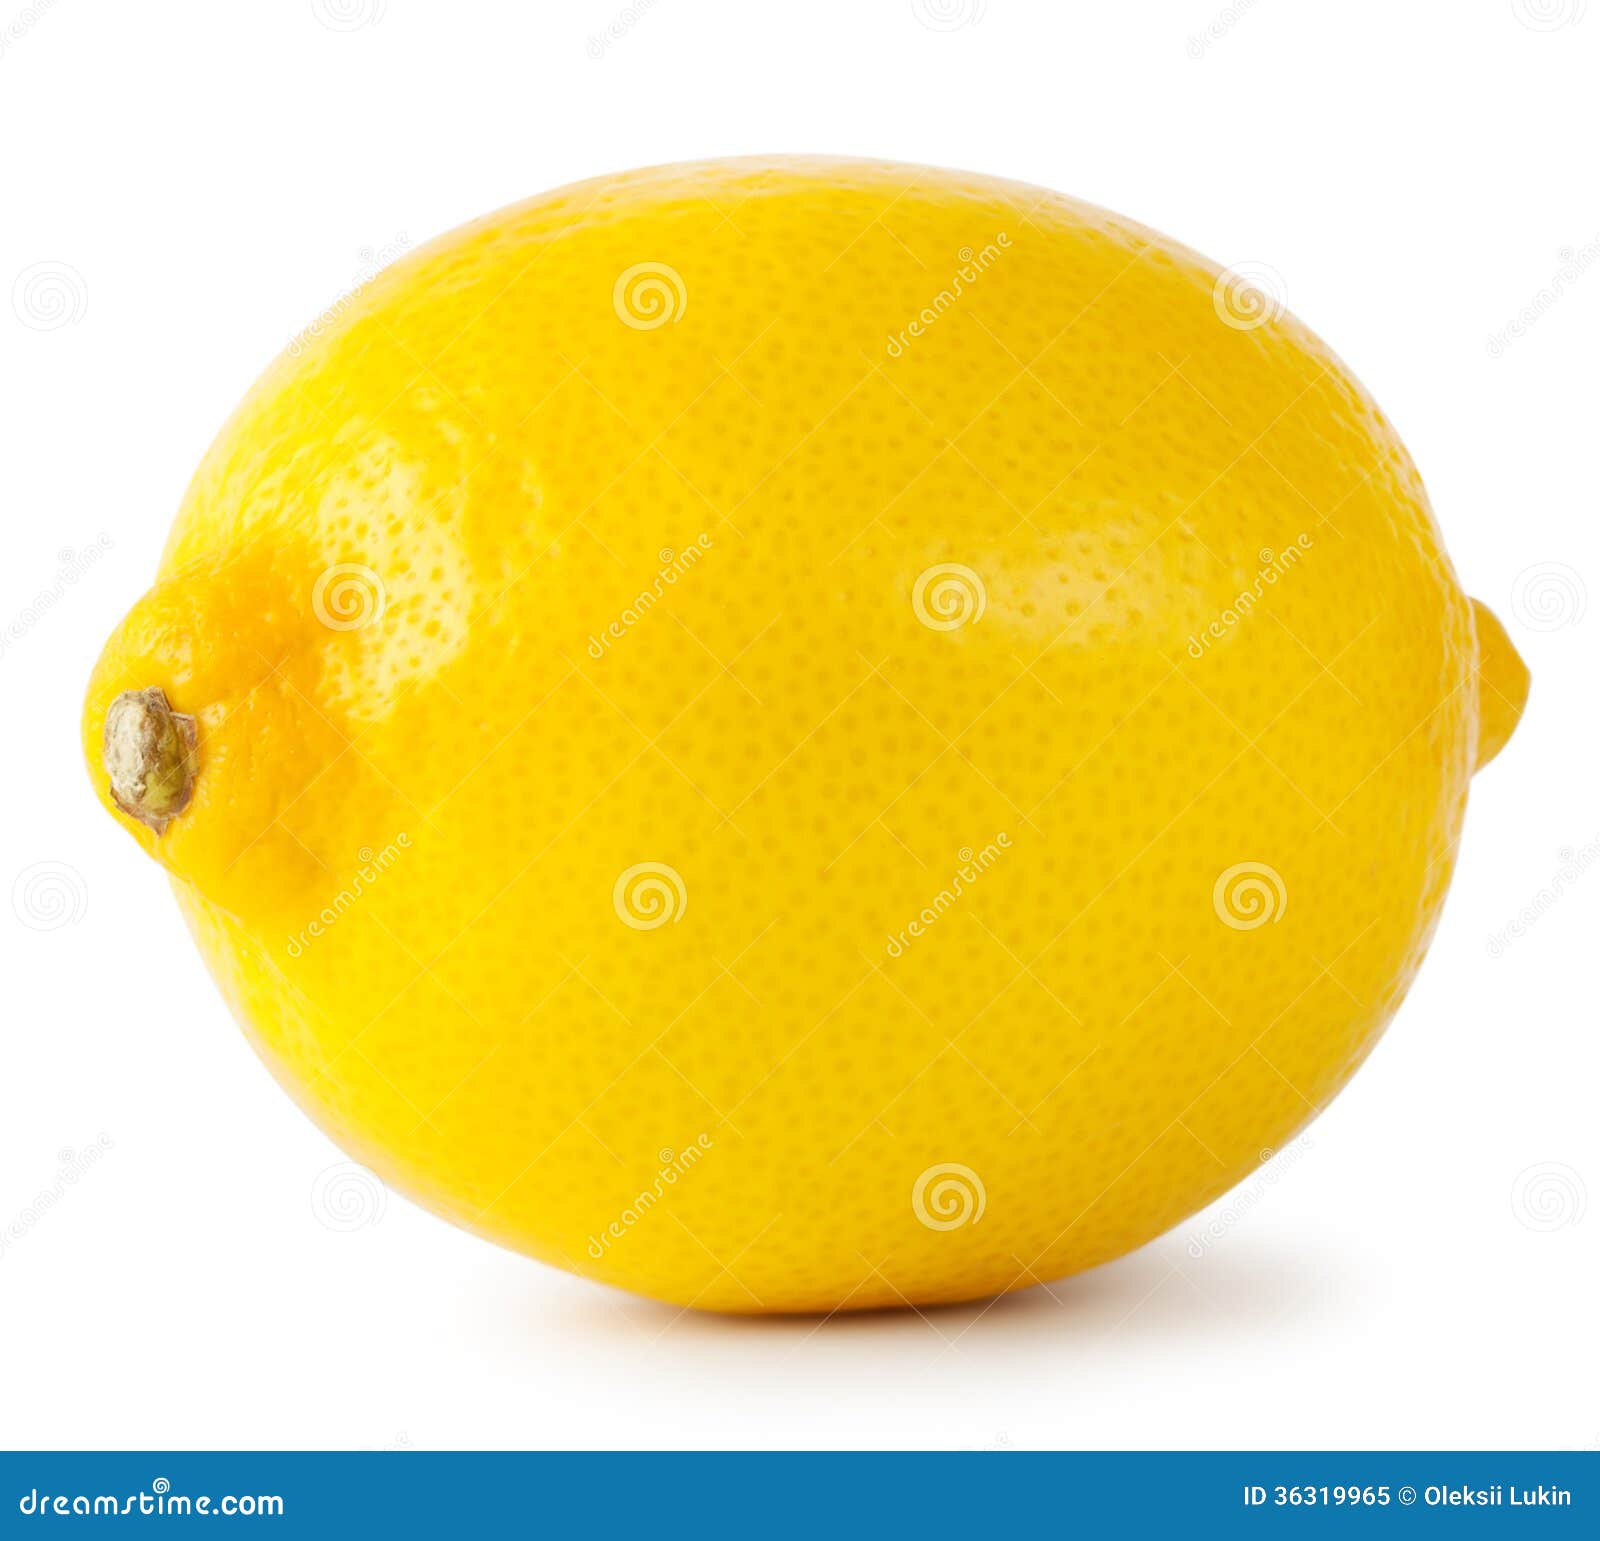 yellow lemon clipart - photo #34